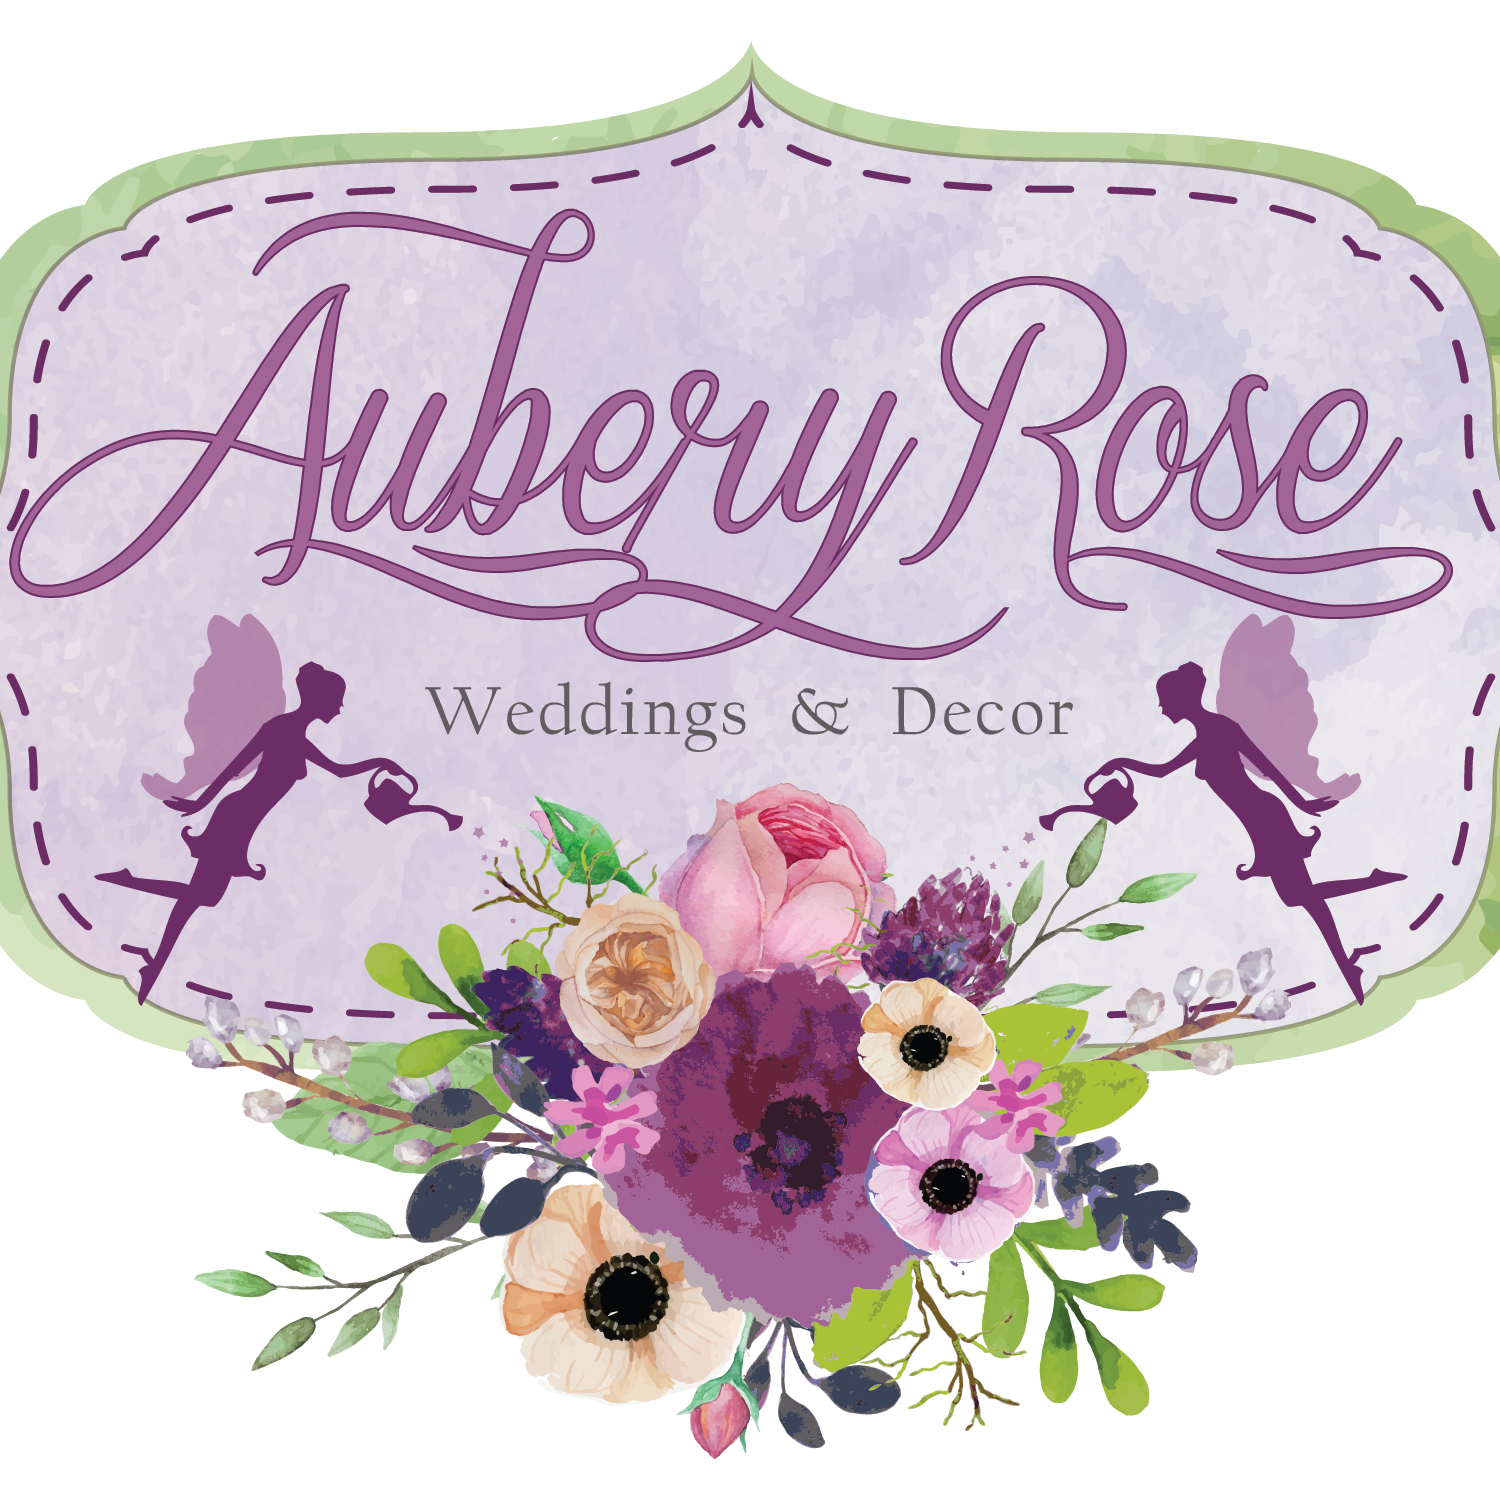 Aubery Rose Wedding